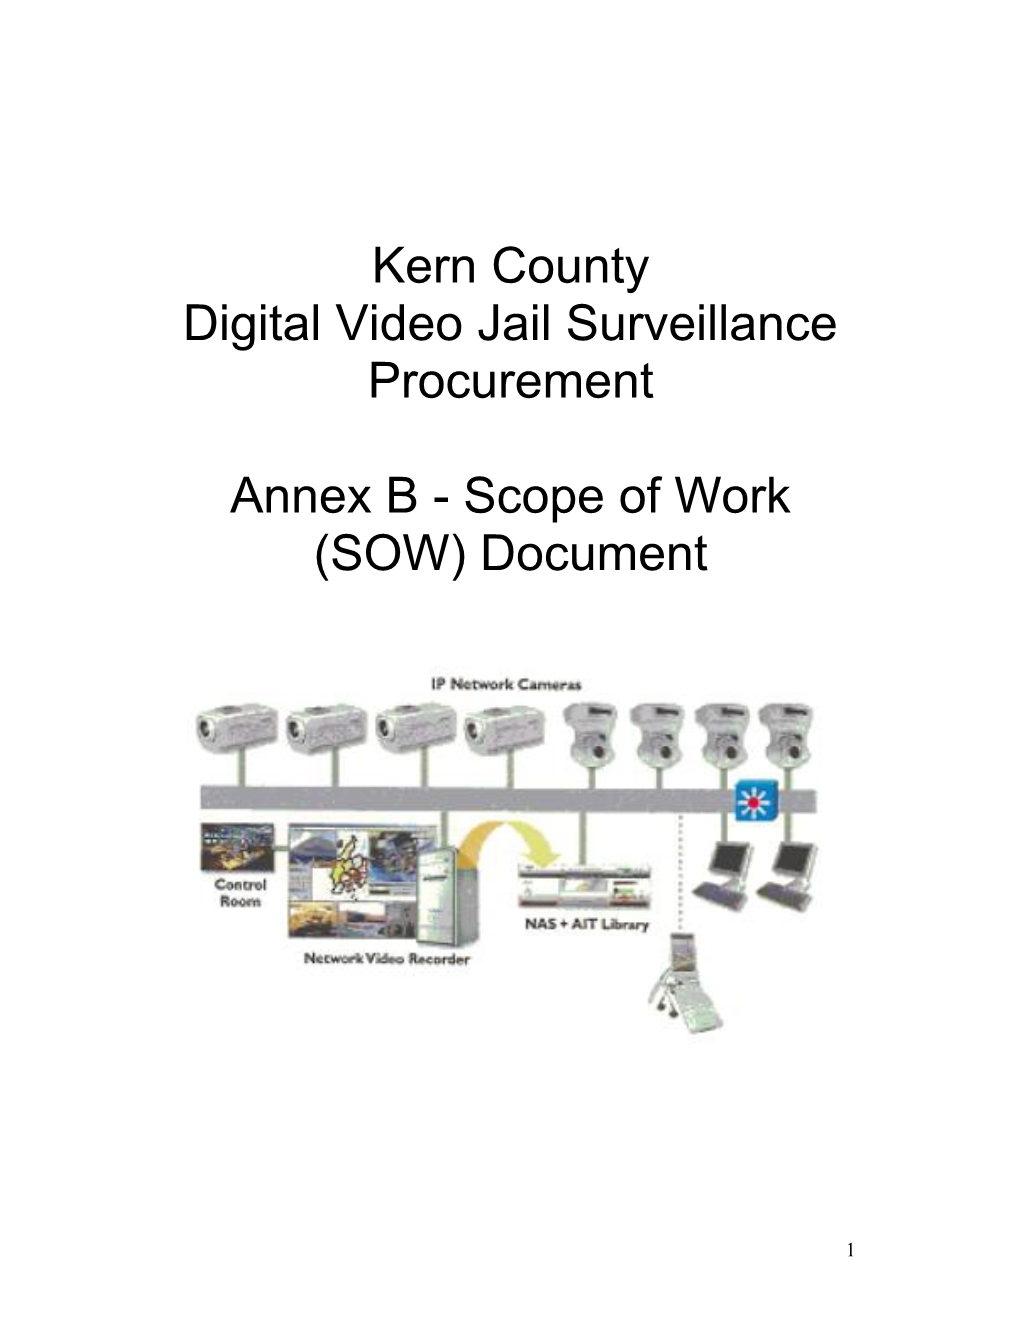 Digital Video Jail Surveillance Procurement